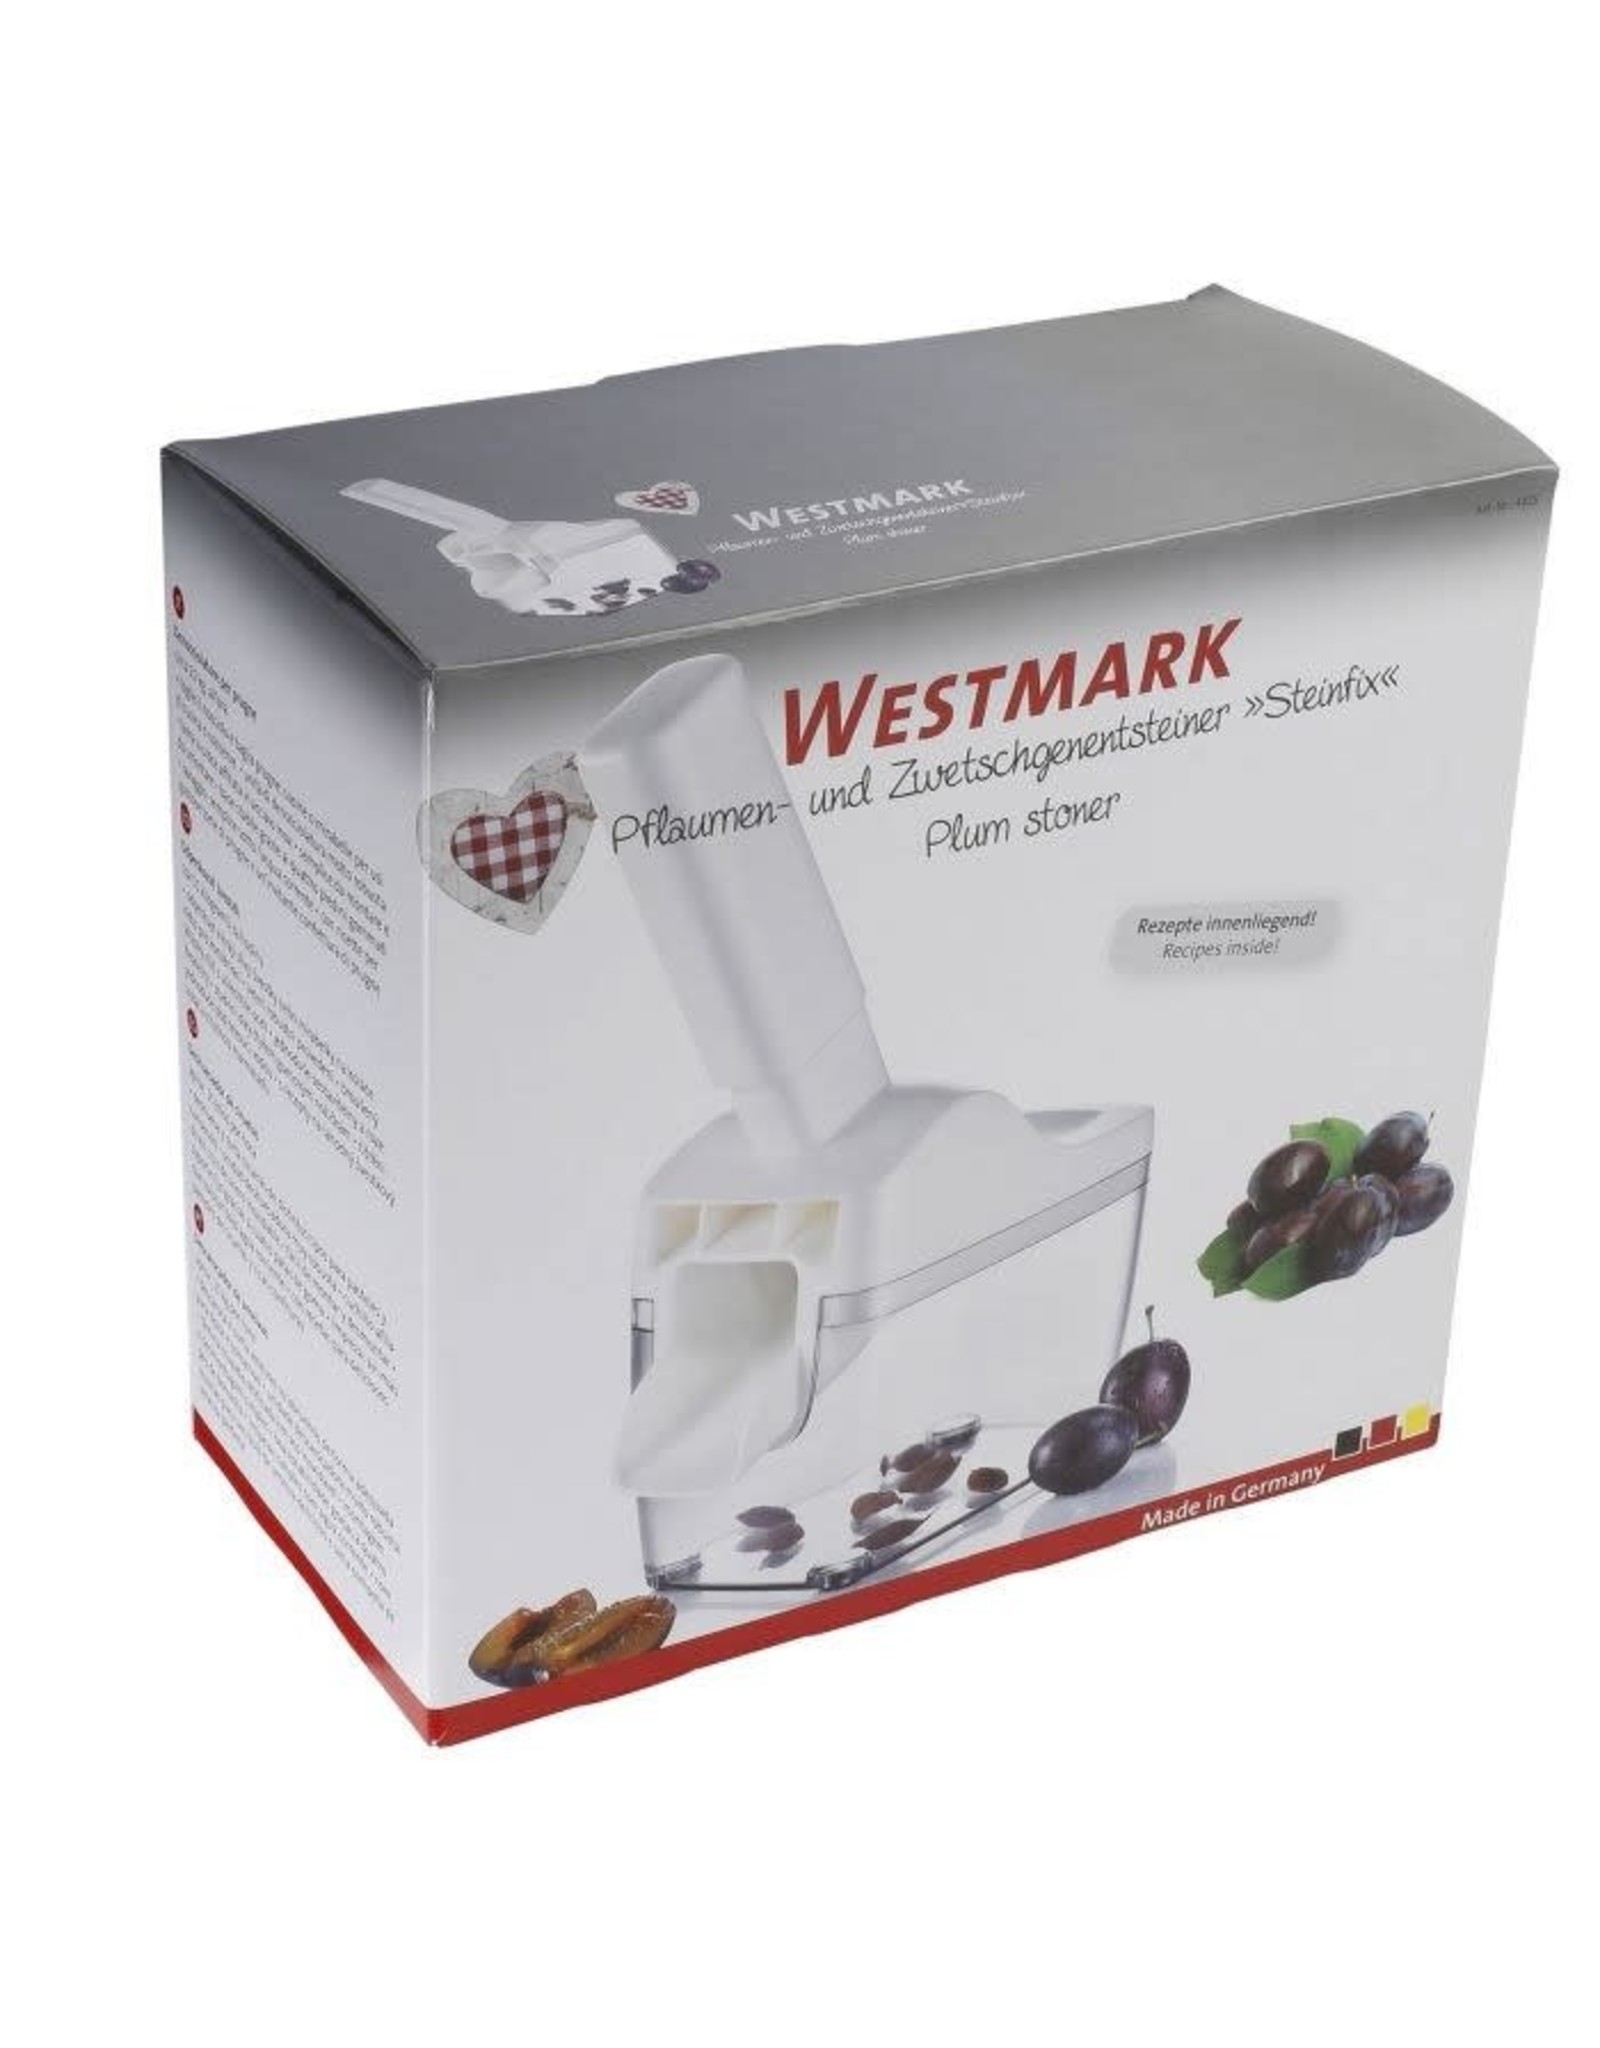 Westmark Westmark Pruimenontpitter "Steinfix"